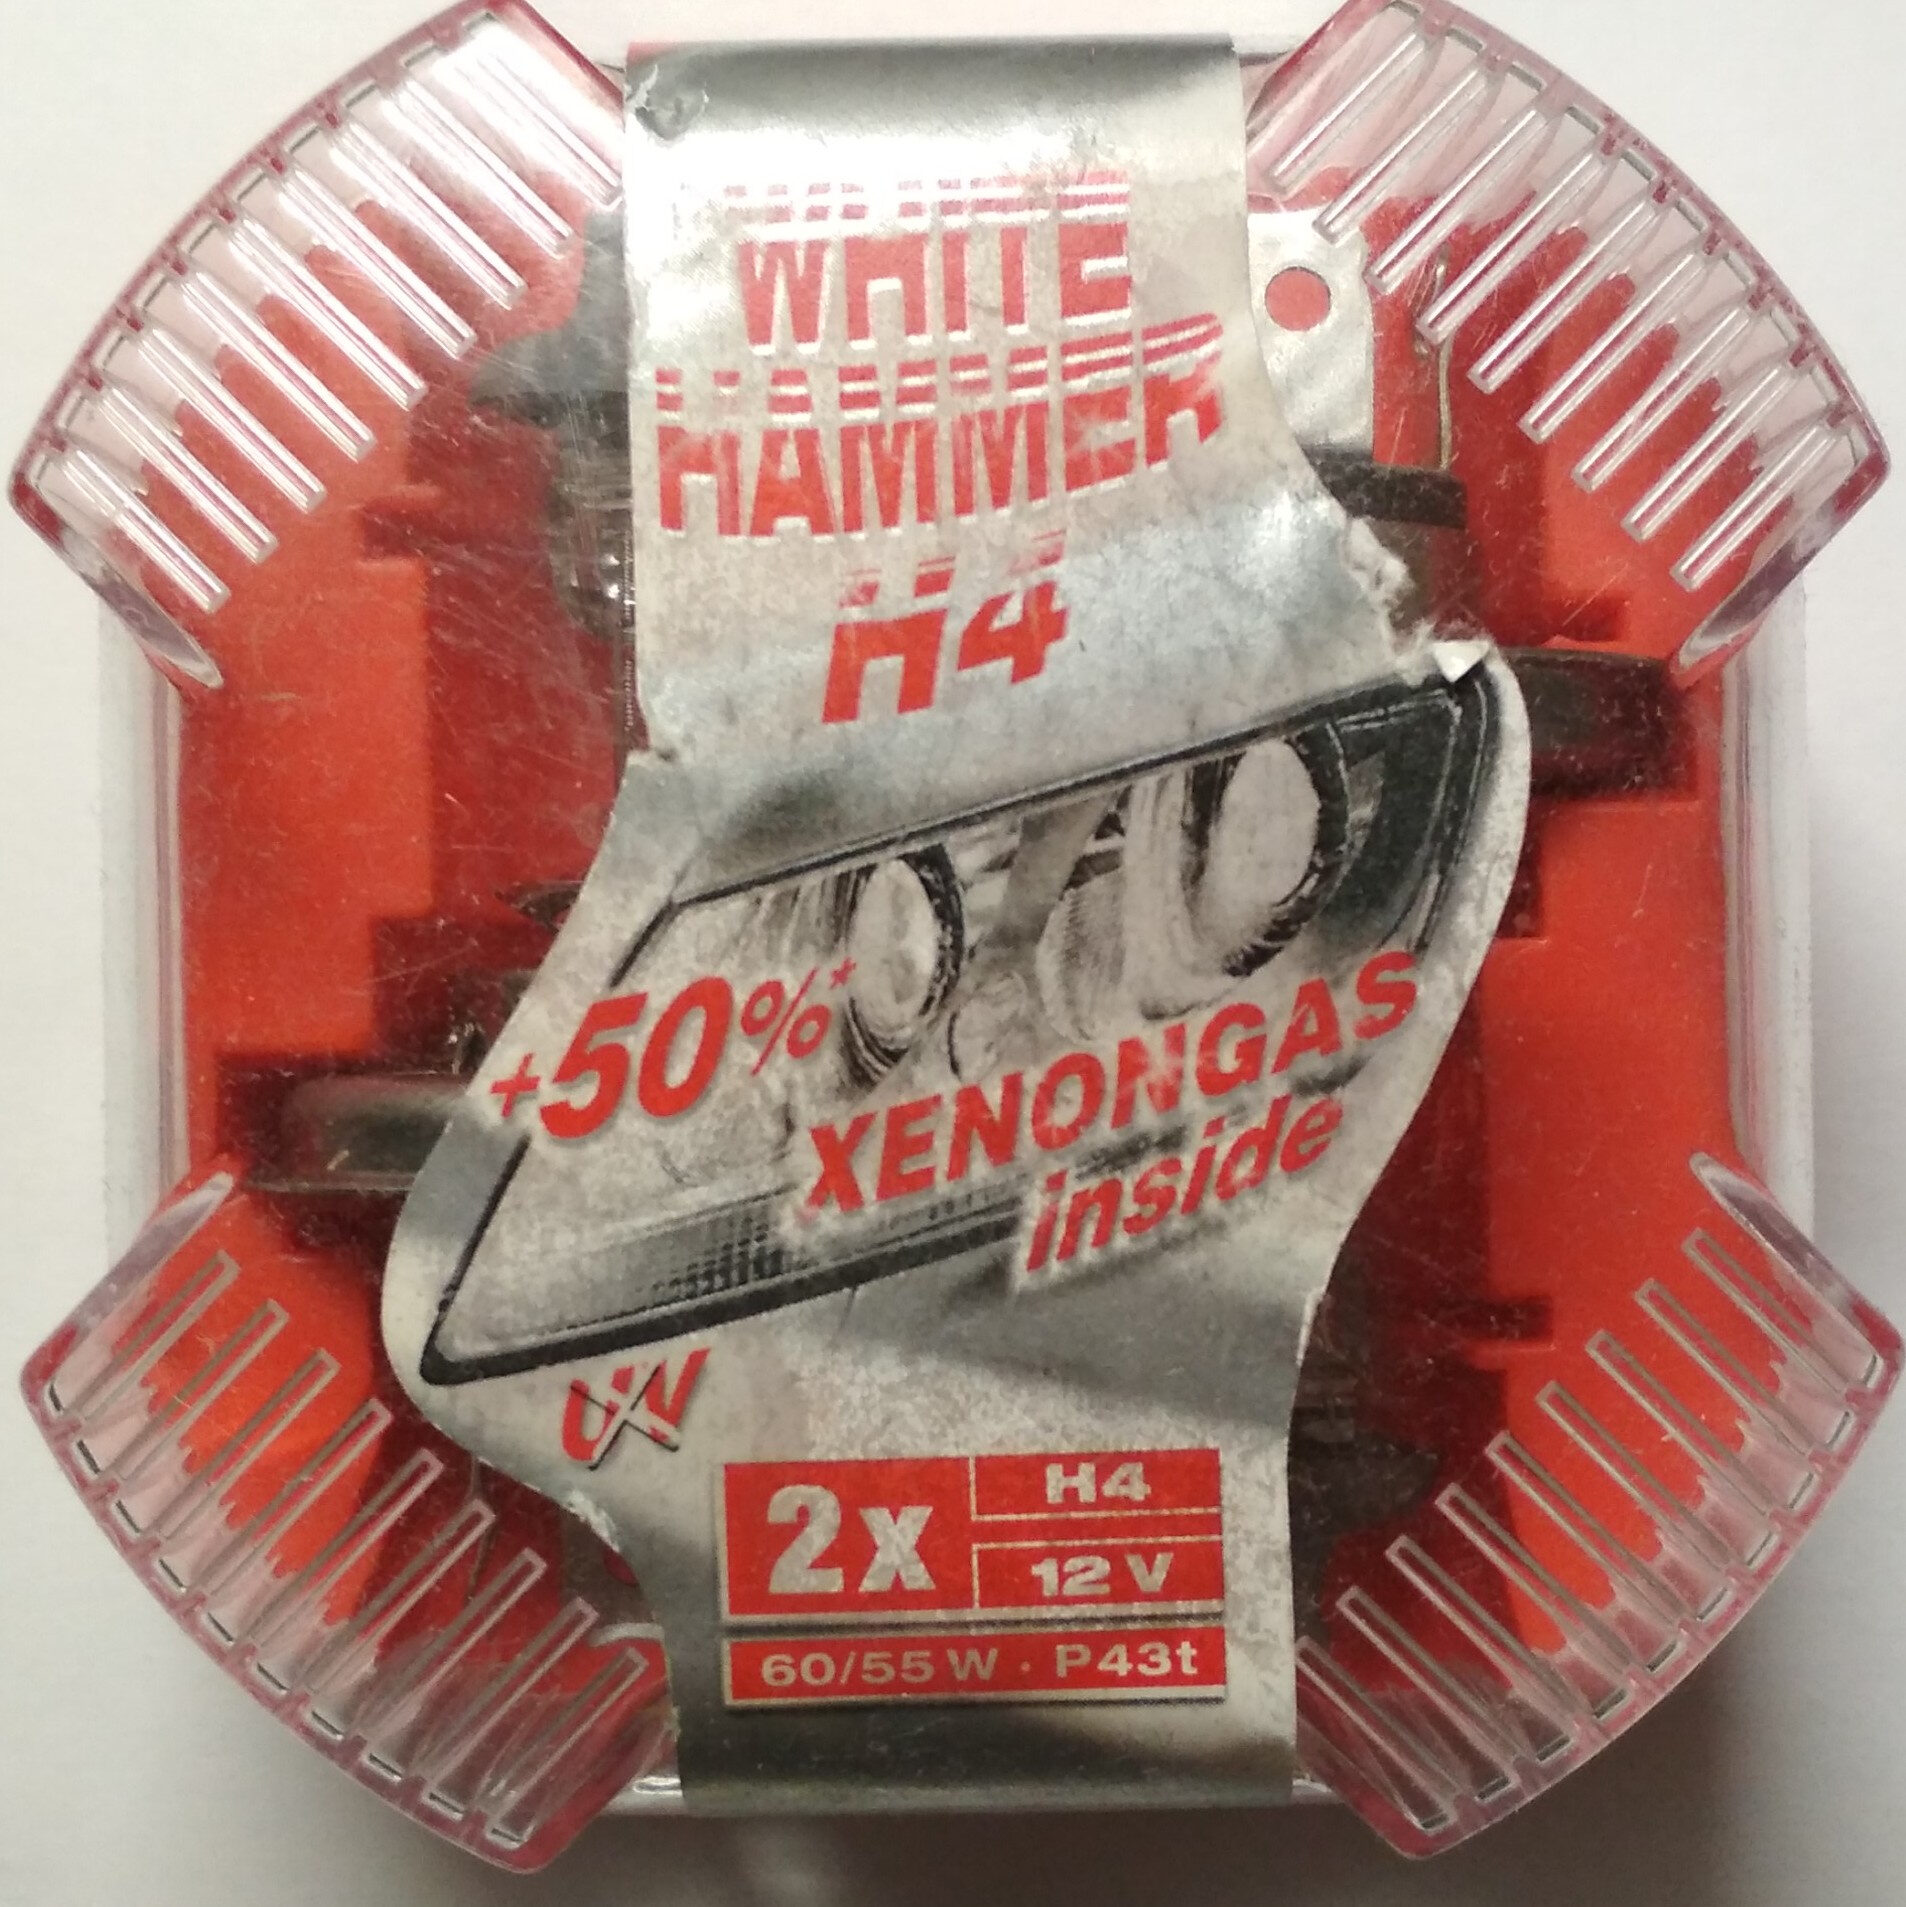 White Hammer H4 - Product - de